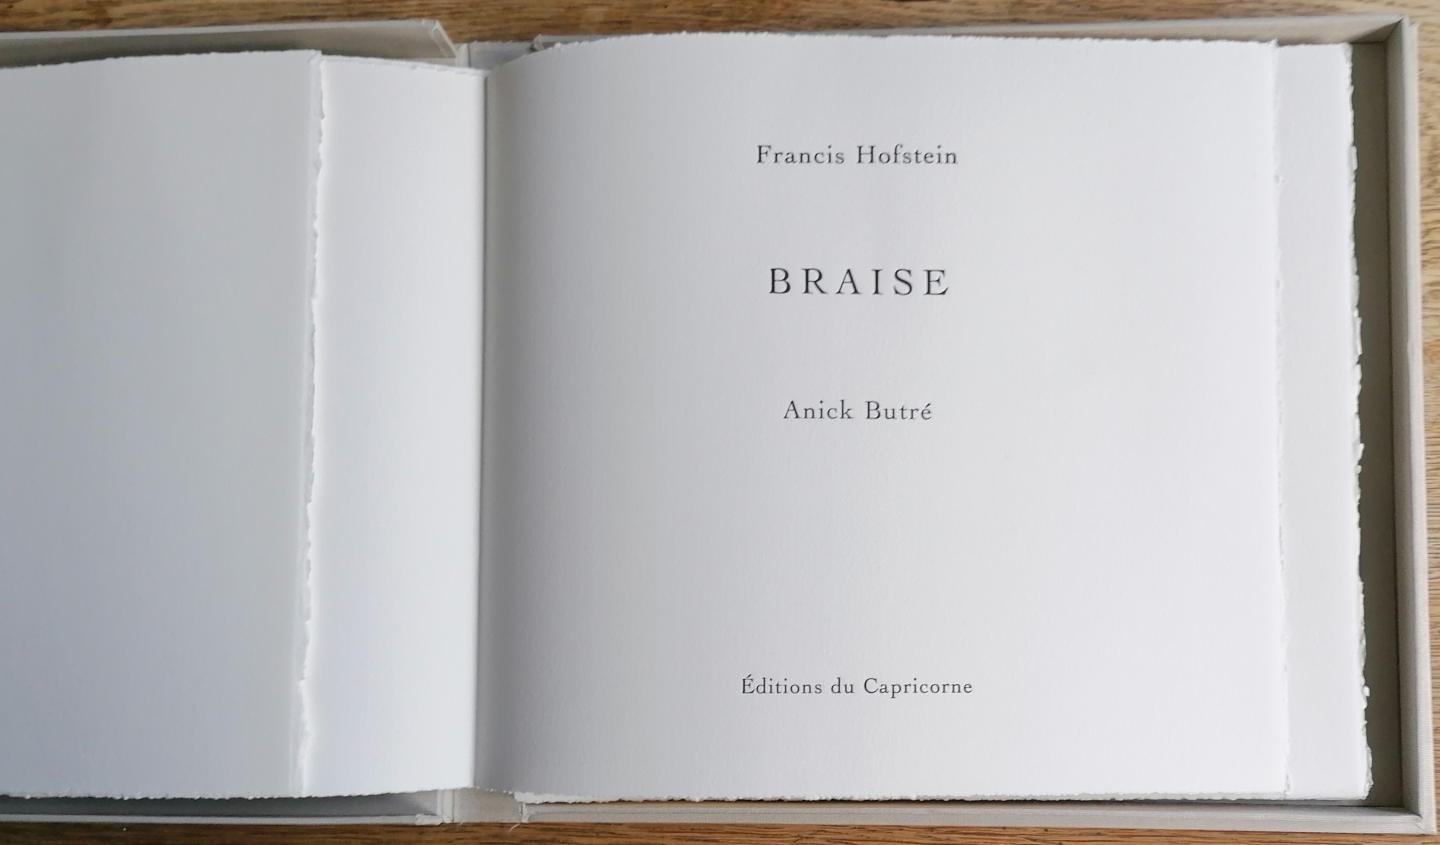 Hofstein, Francis (tekst) & Anick Butré (beeld) - Braise